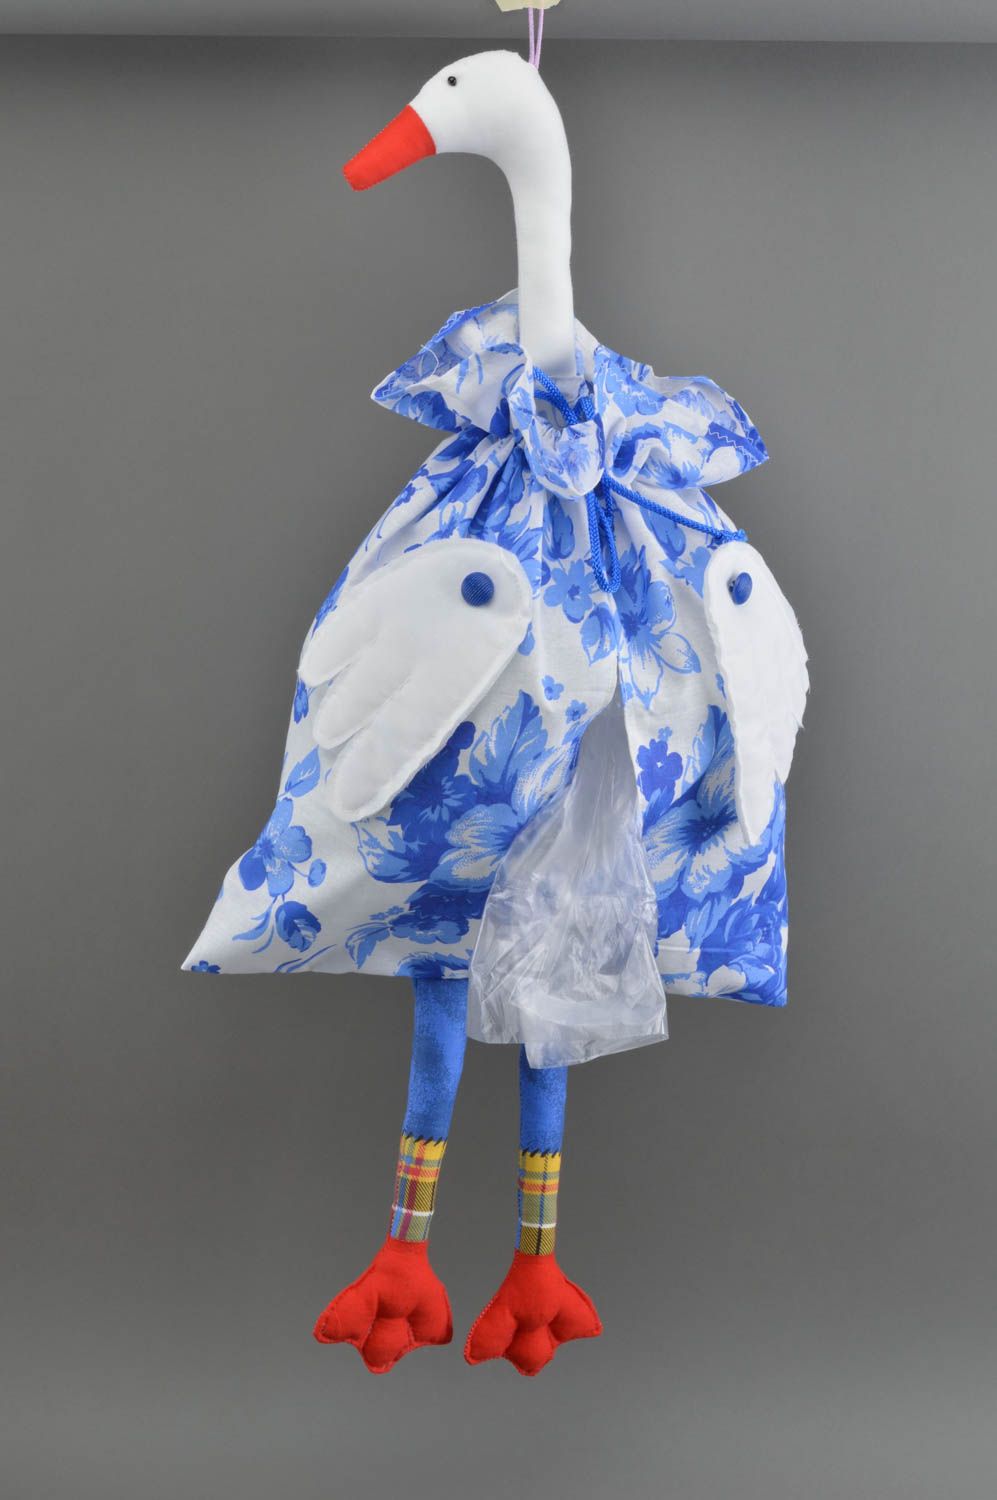 Handmade textile toy for plastic bags storage kitchen decor ideas gift ideas photo 1